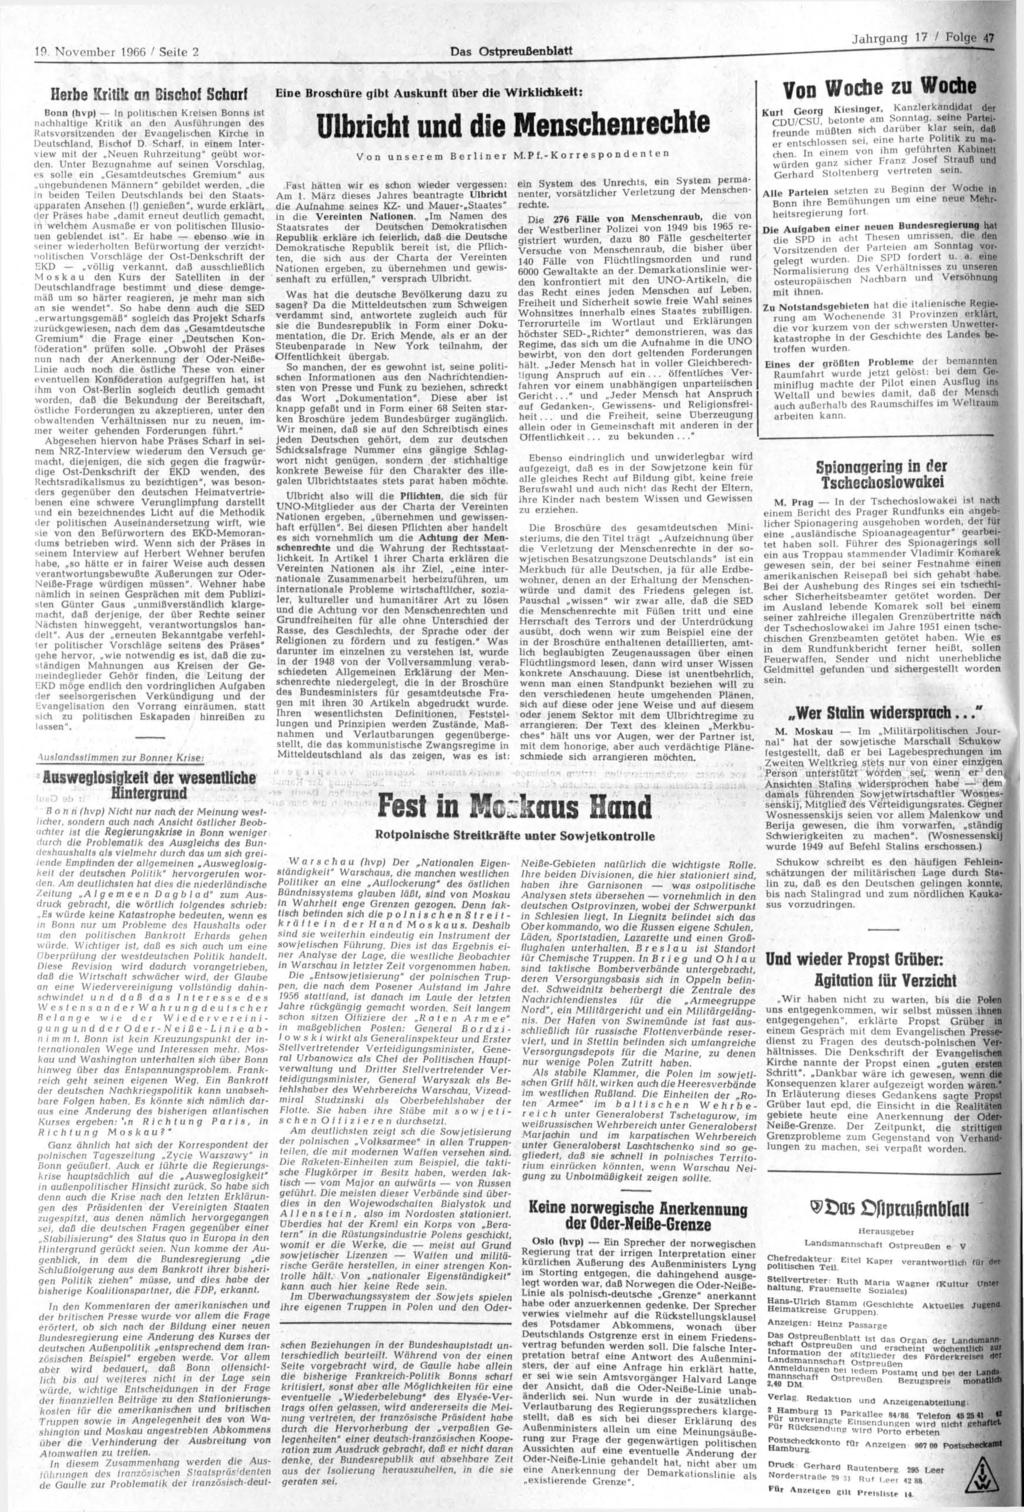 10 November 1966 / Seite 2 Das Ostpreußenblatt. - Herbe Kritik a?